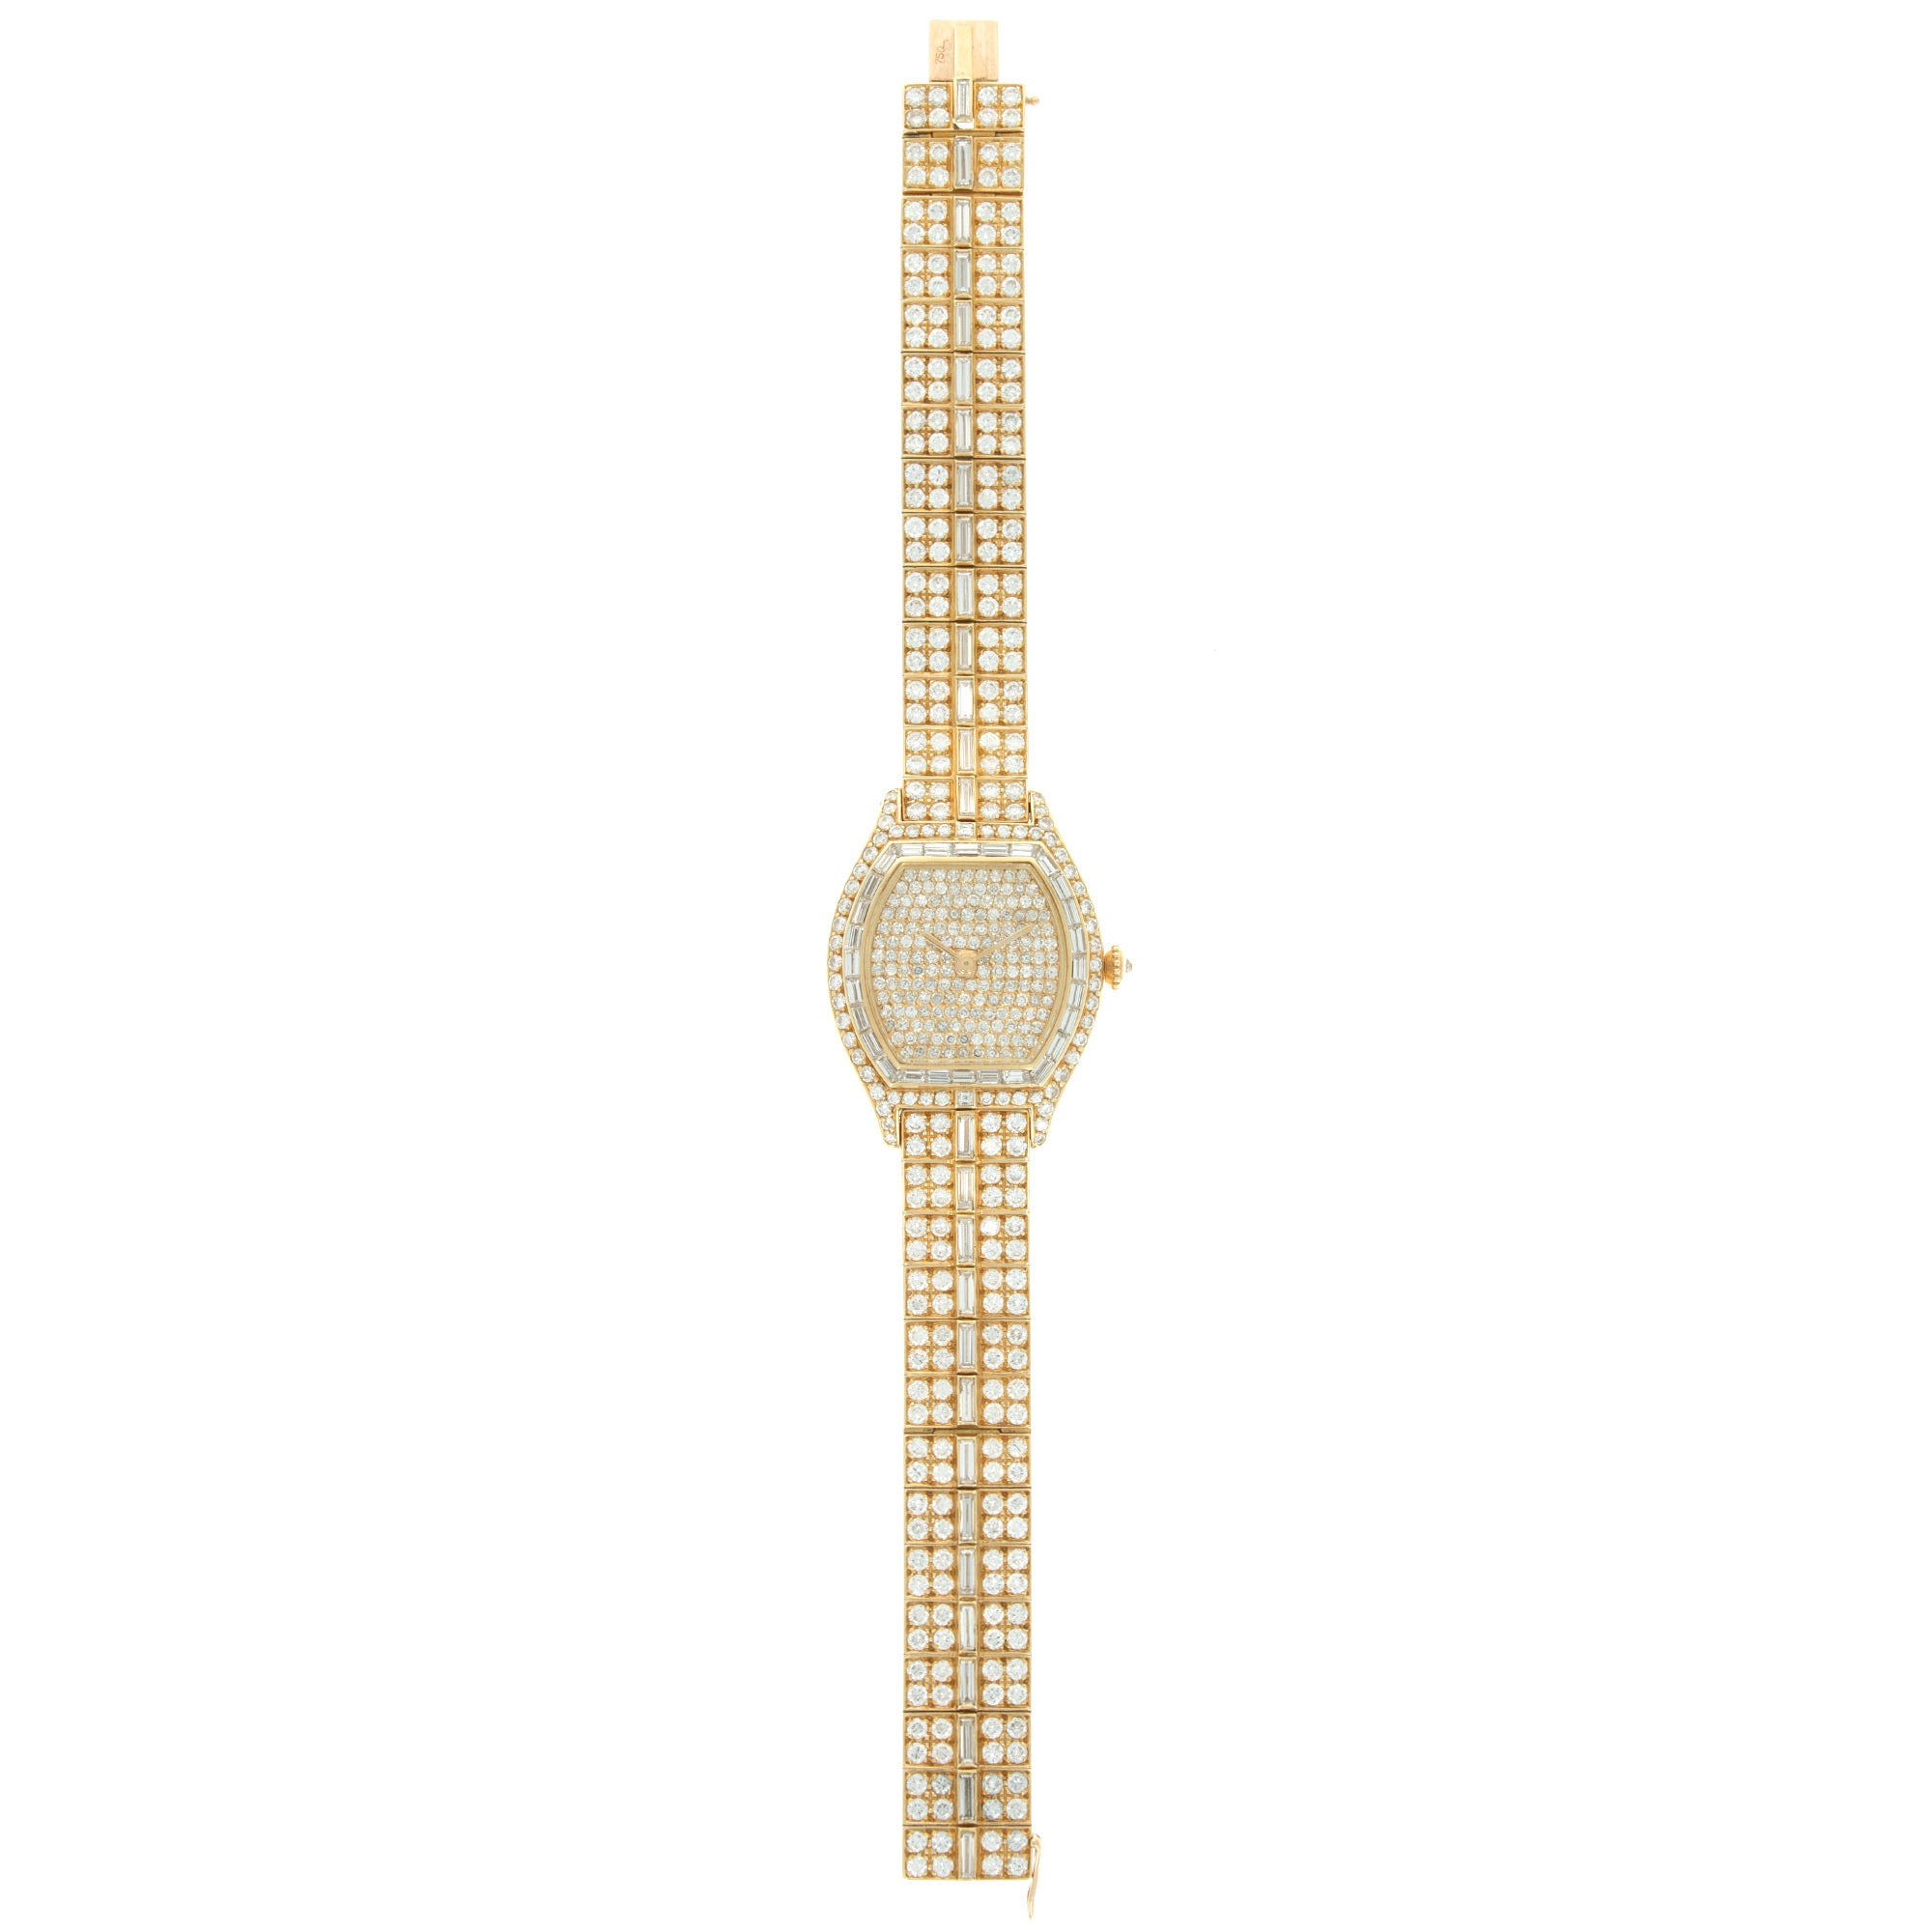 Cartier - Cartier Yellow Gold Tortue Diamond Watch - The Keystone Watches